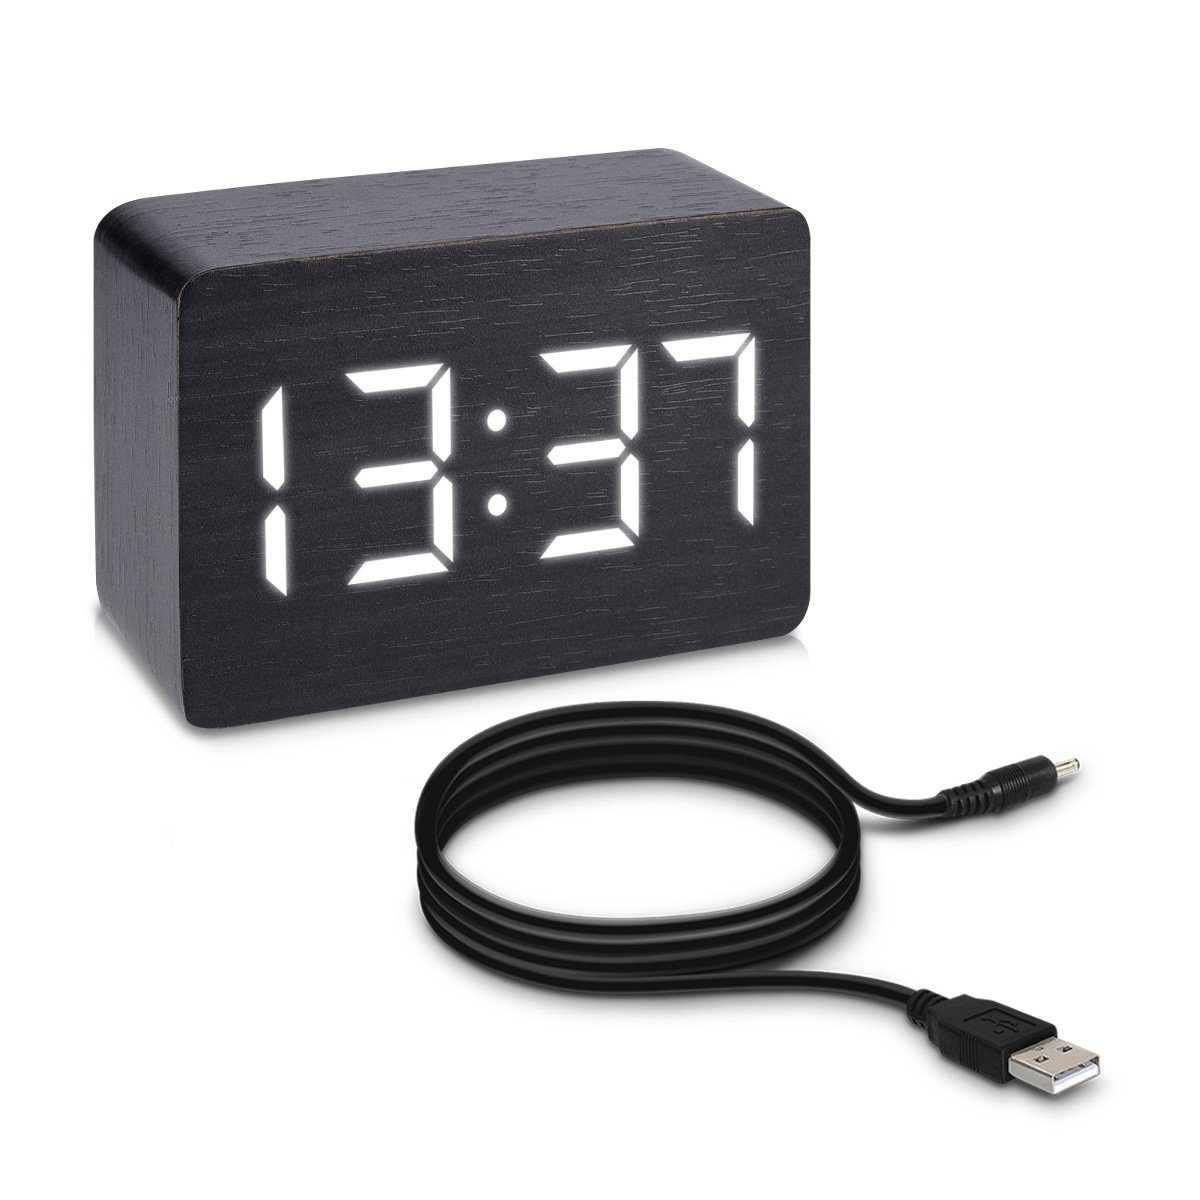 DE Digital Wecker LED Projektionswecker Temperatur Alarm USB Projektor Funkuhr 